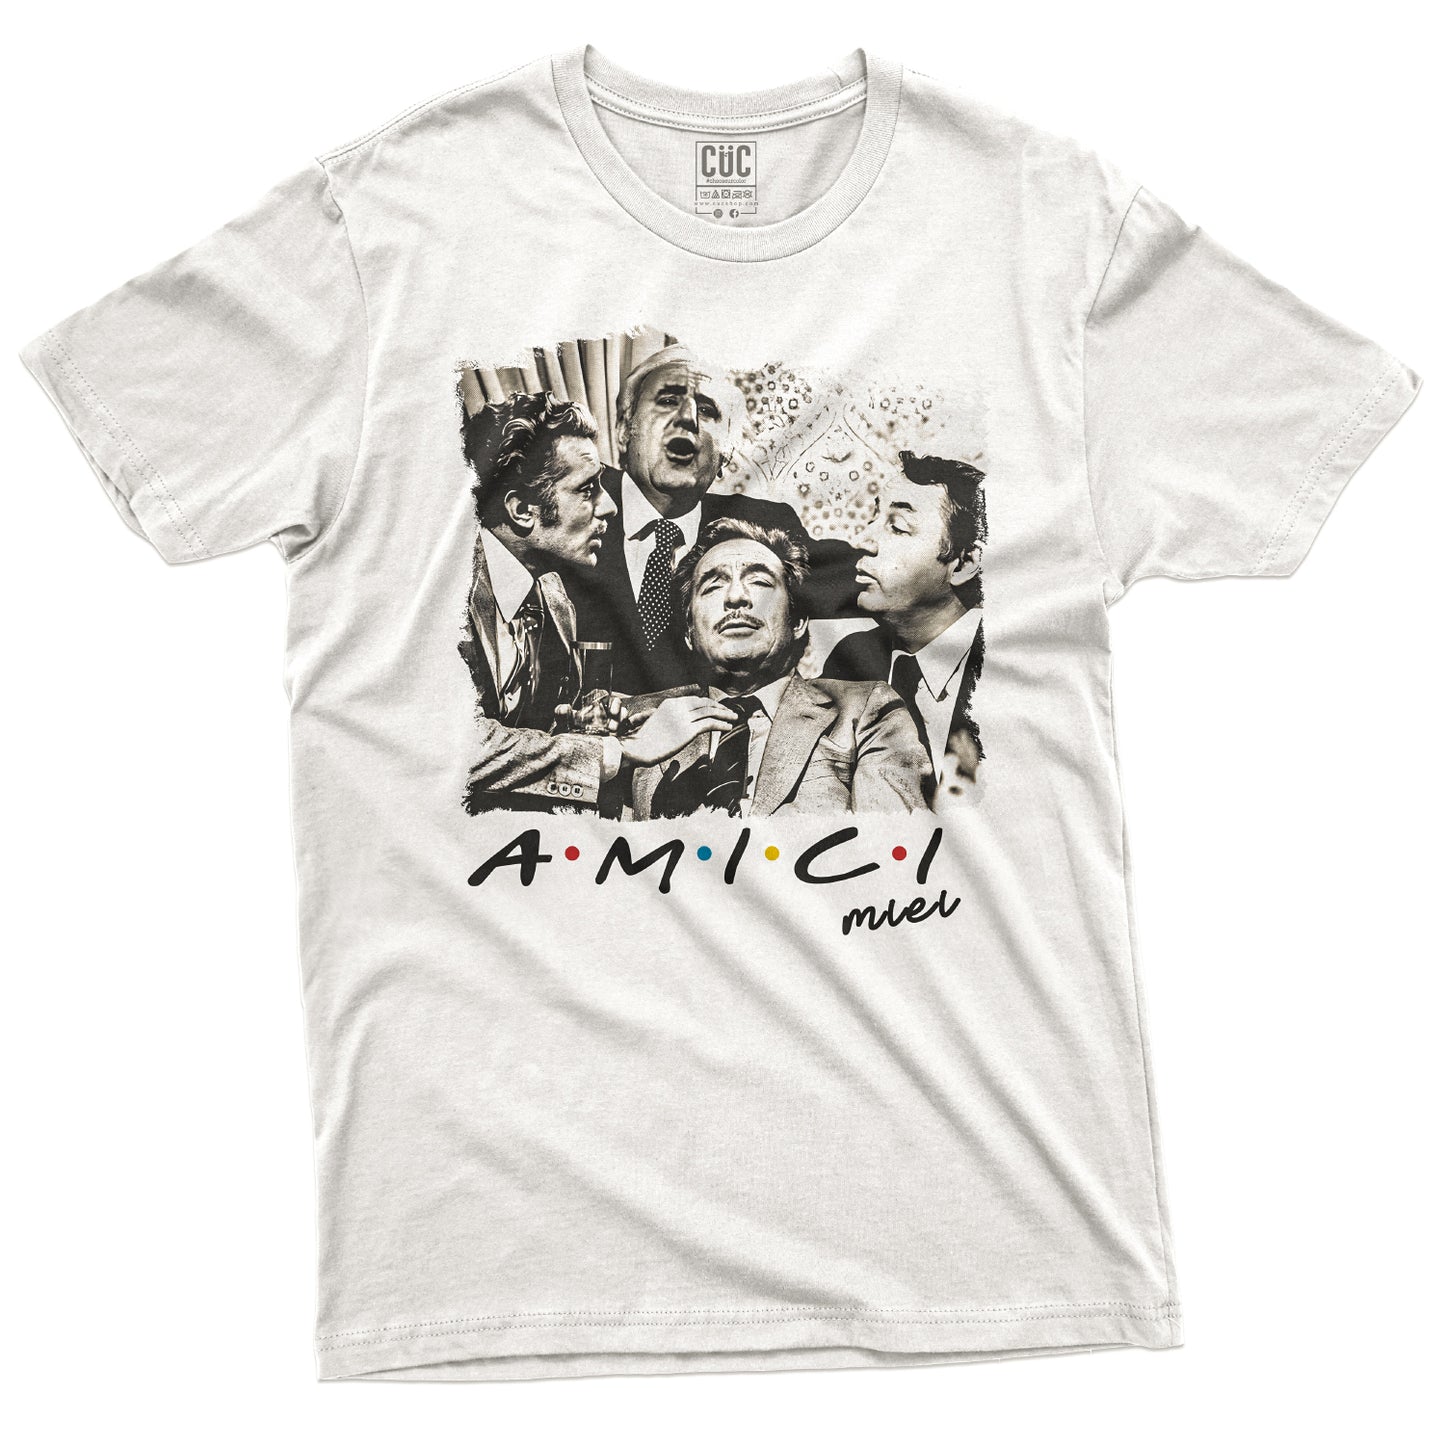 CUC T-Shirt AMICI FRIENDS - Amici miei- Friends  #chooseurcolor